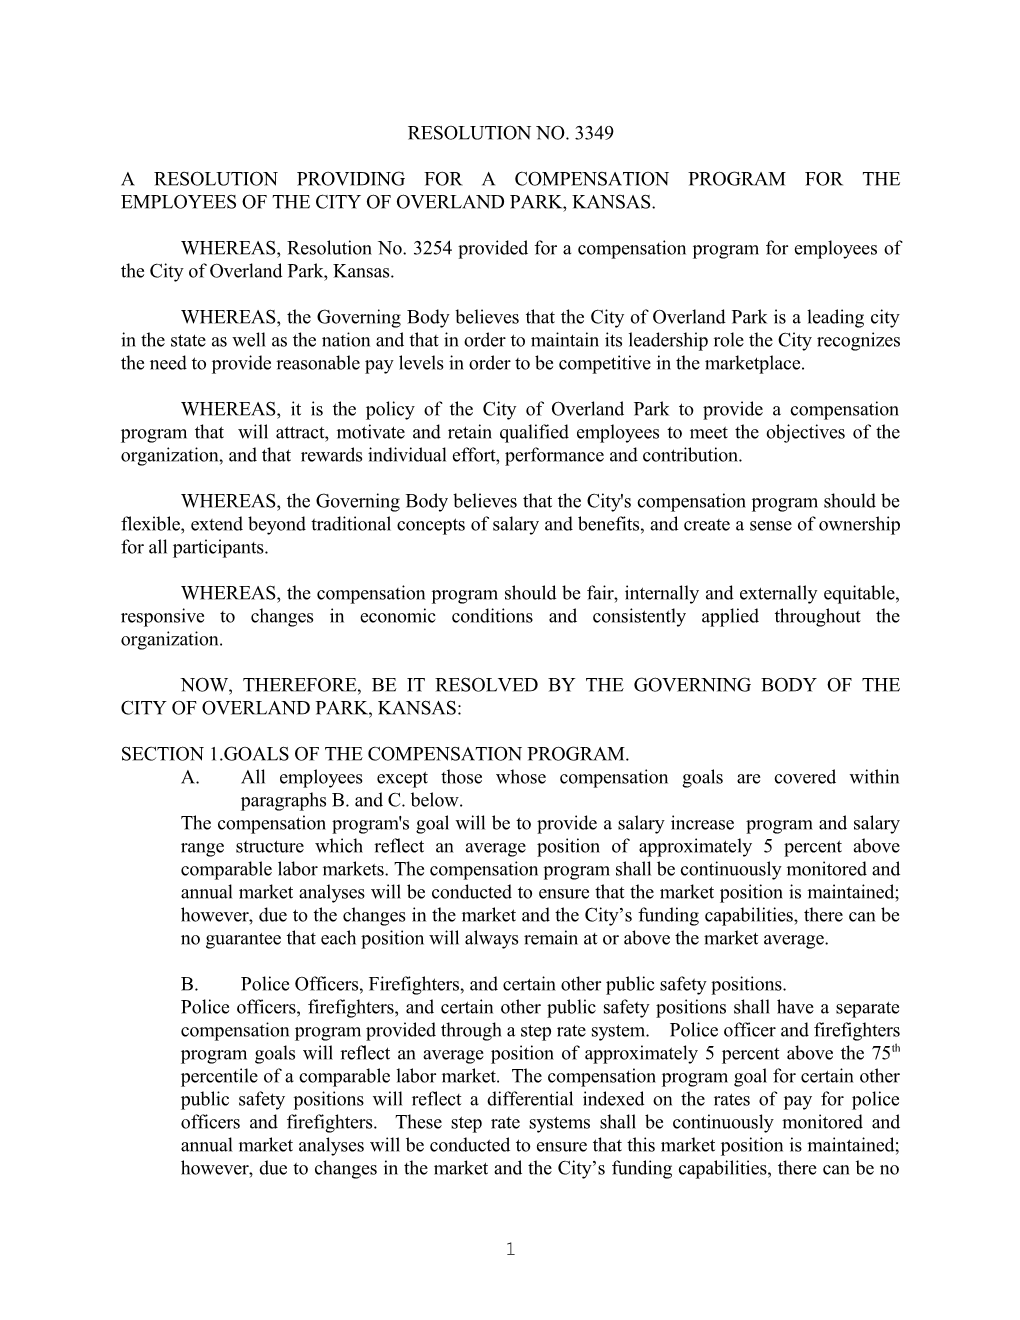 Compensation Program - Resolution No. 3349 - August 11, 2003